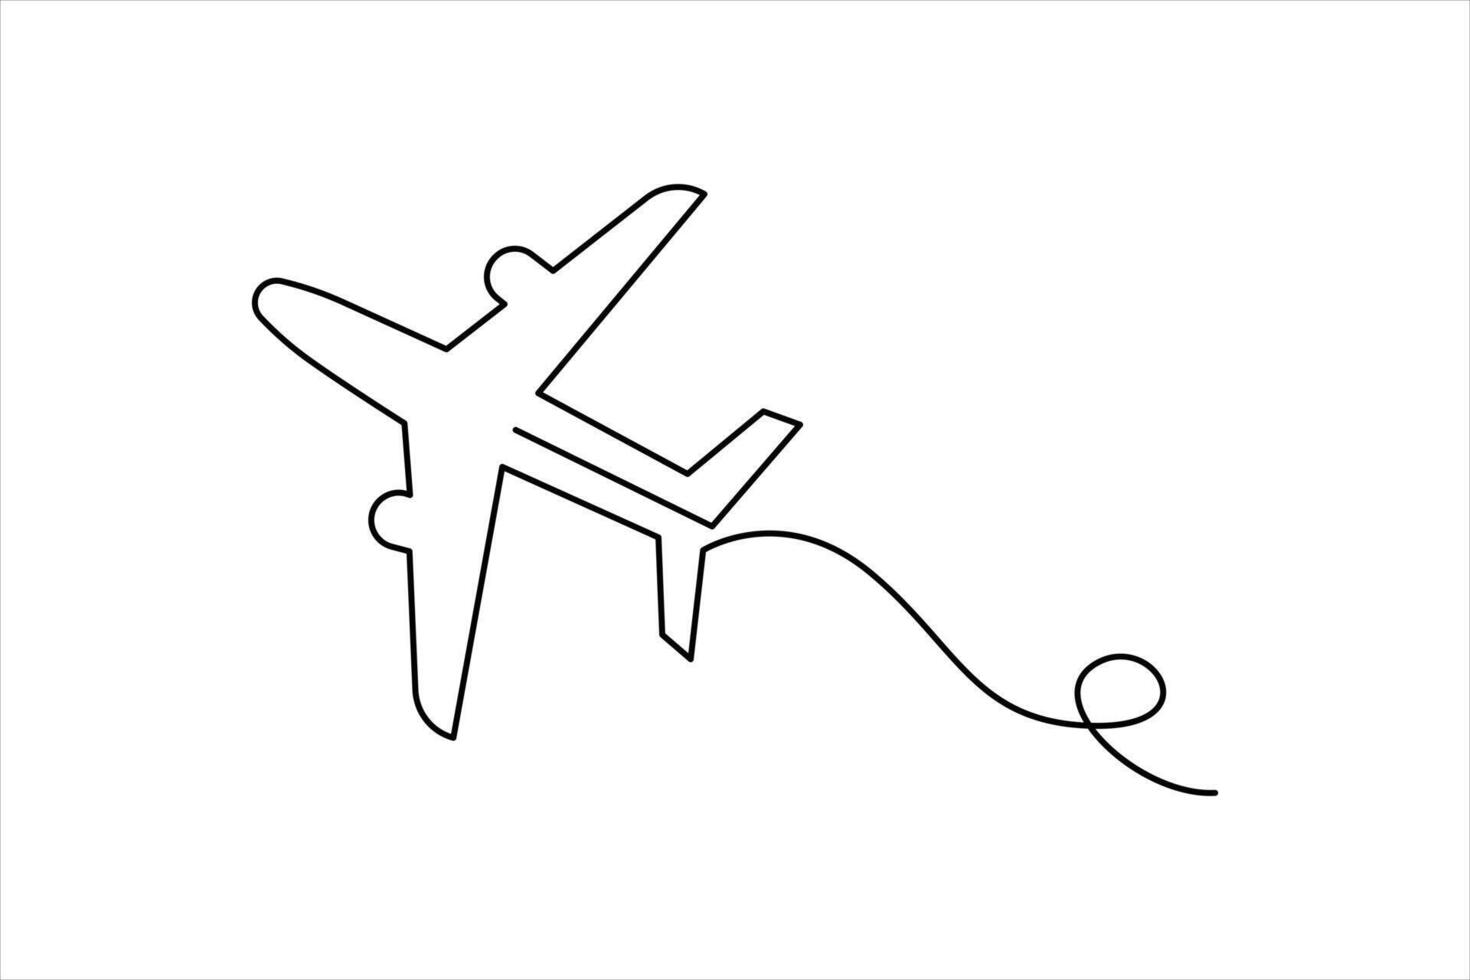 Airplane Continuous Single Line art Vectors Illustration design.